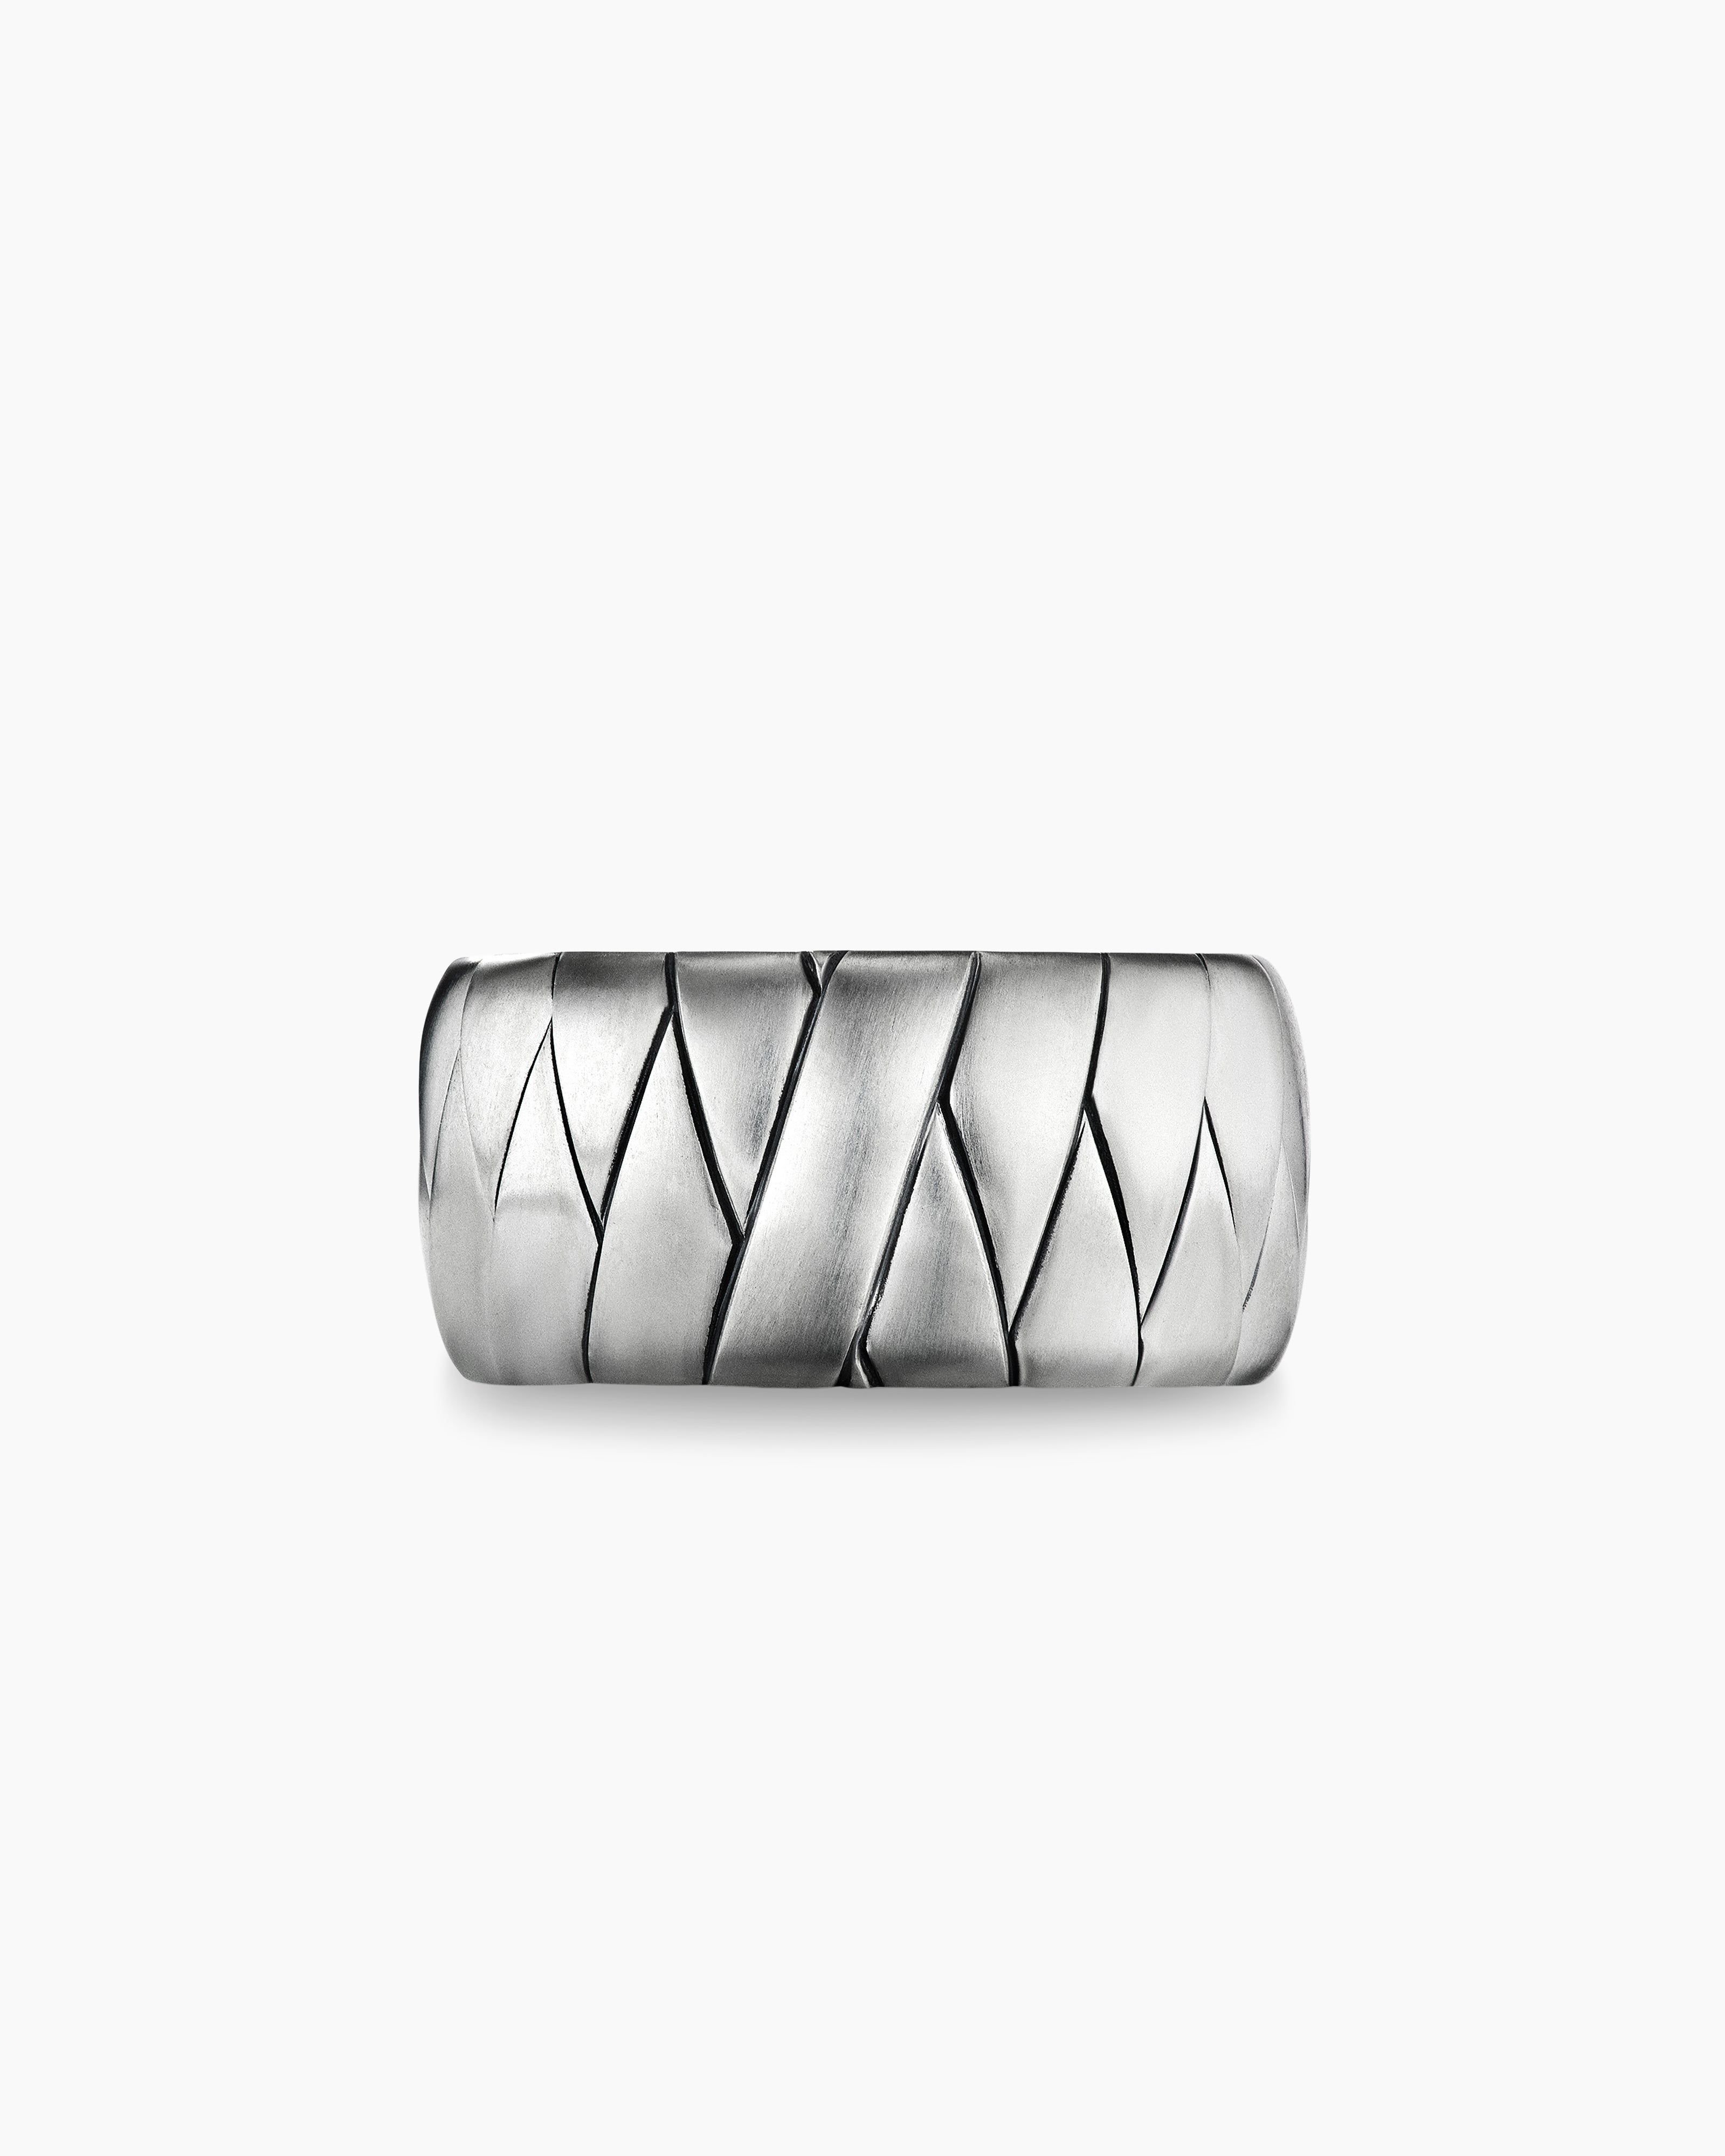 David Yurman Men's Cairo Wrap Band Ring in Sterling Silver